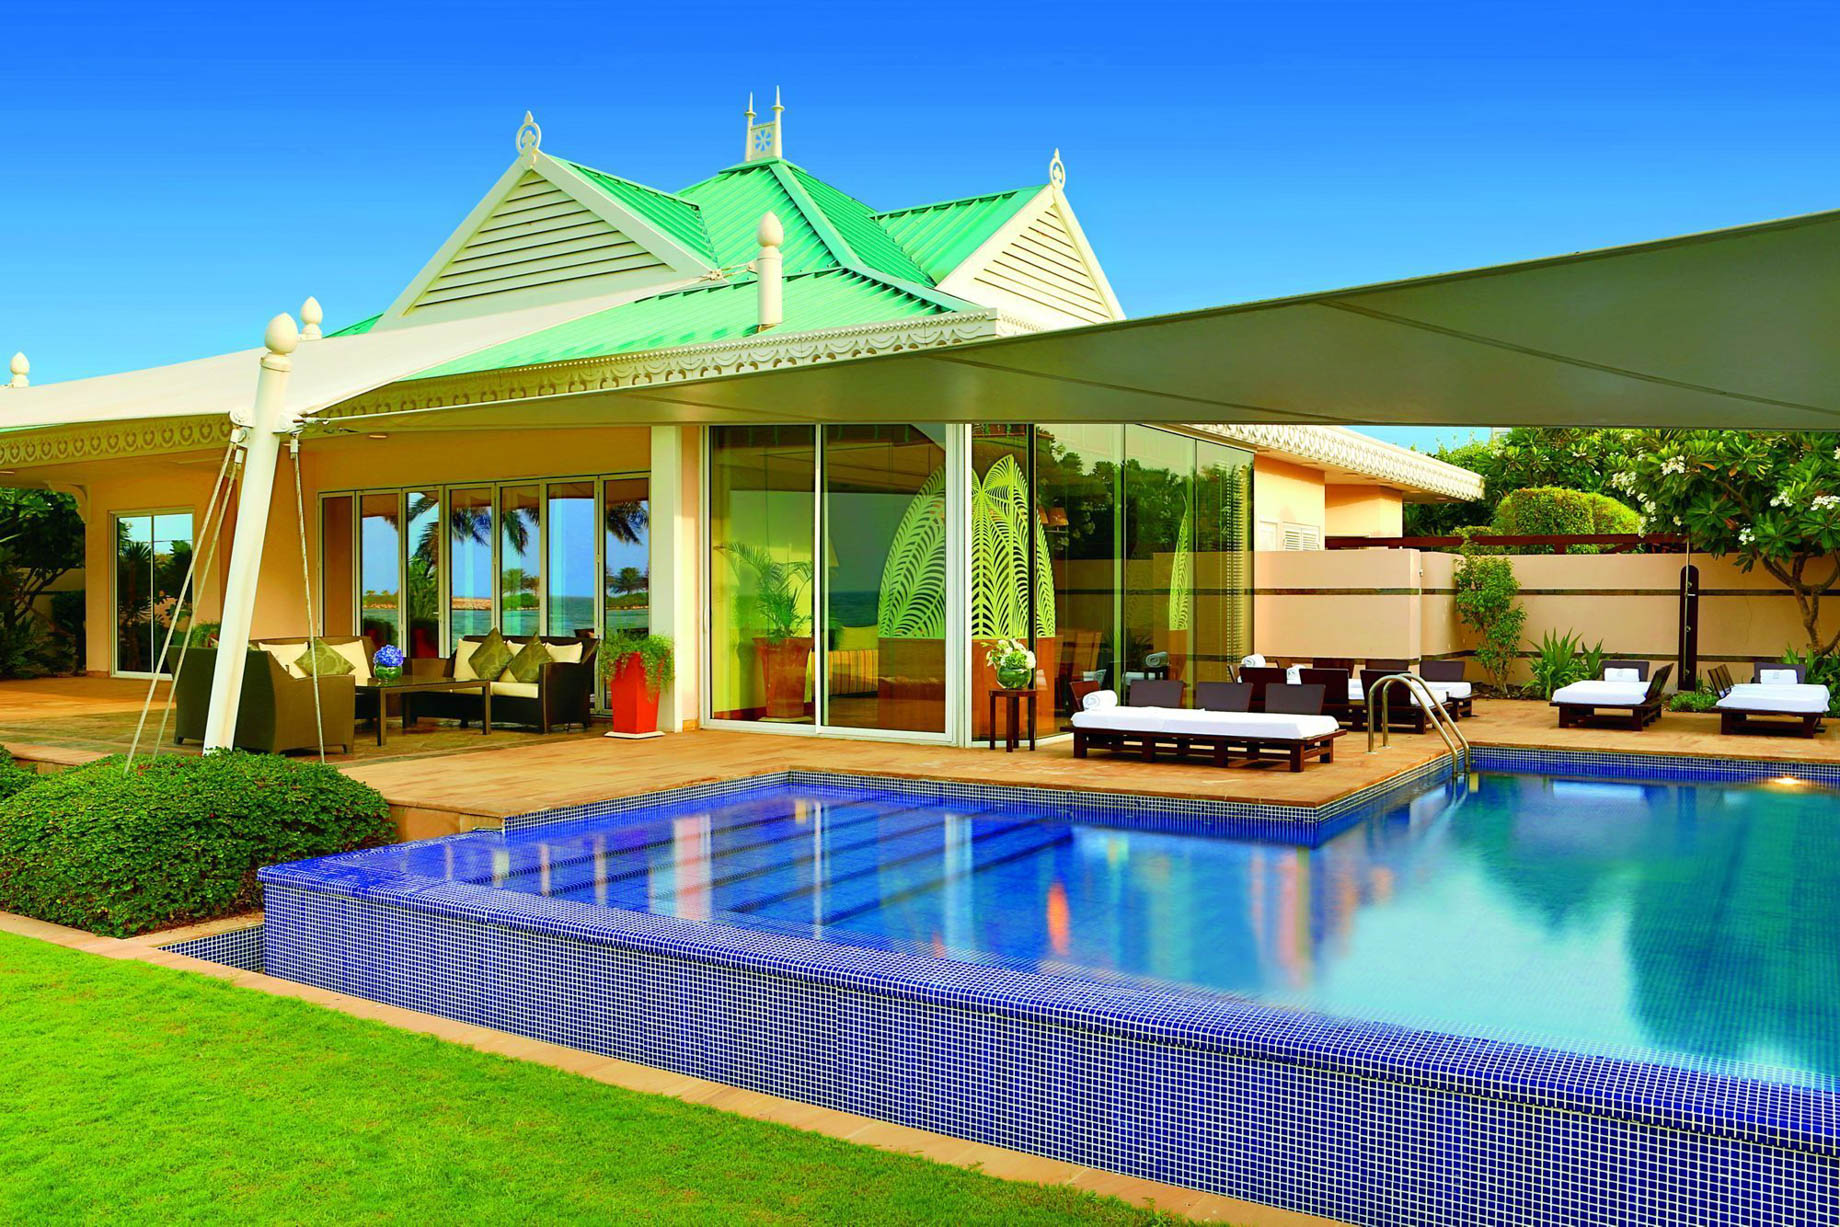 The Ritz-Carlton, Bahrain Resort Hotel – Manama, Bahrain – Villa Pool Deck